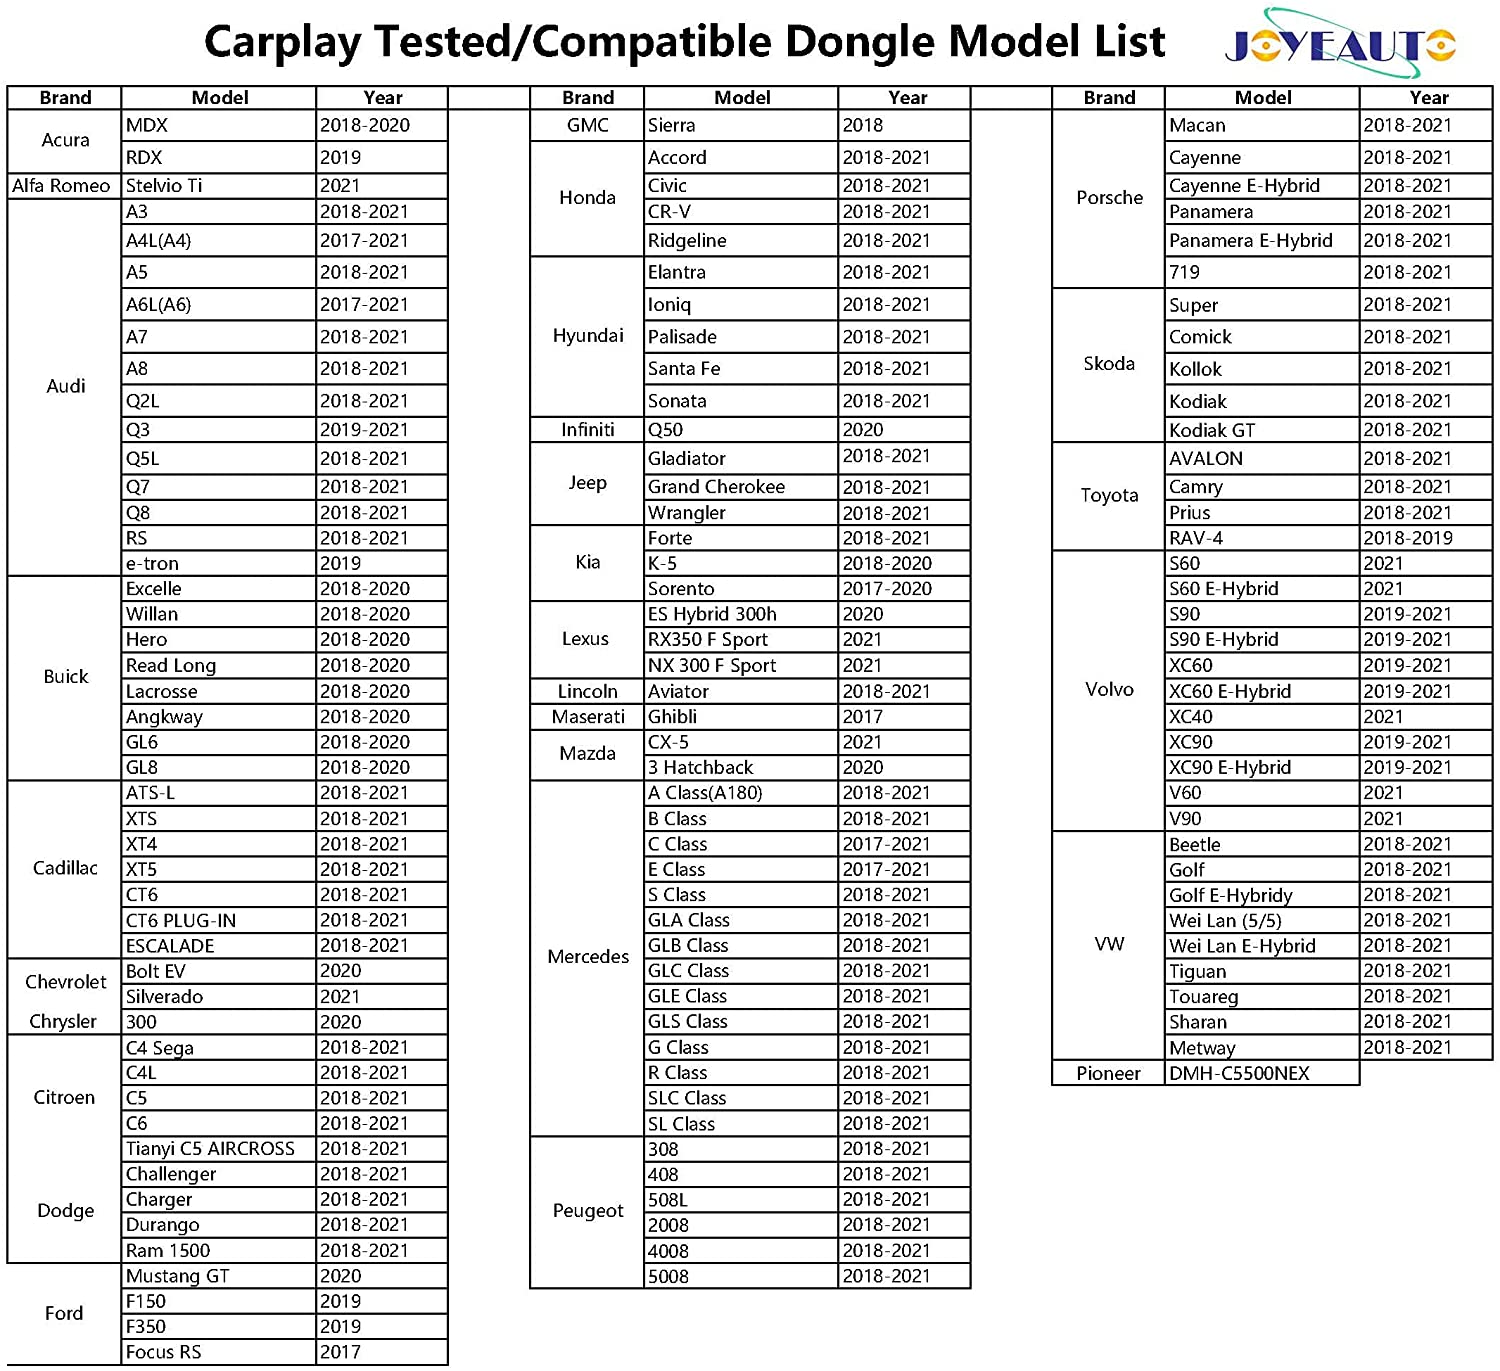 Wireless Apple CarPlay A+C Adapter, Android 9.0 Netflix Box, 4g+32G iOS 14, Audi, Dodge, Honda, Jeep, Mercedes, Porsche, Ram, Toyota, Volvo, VW